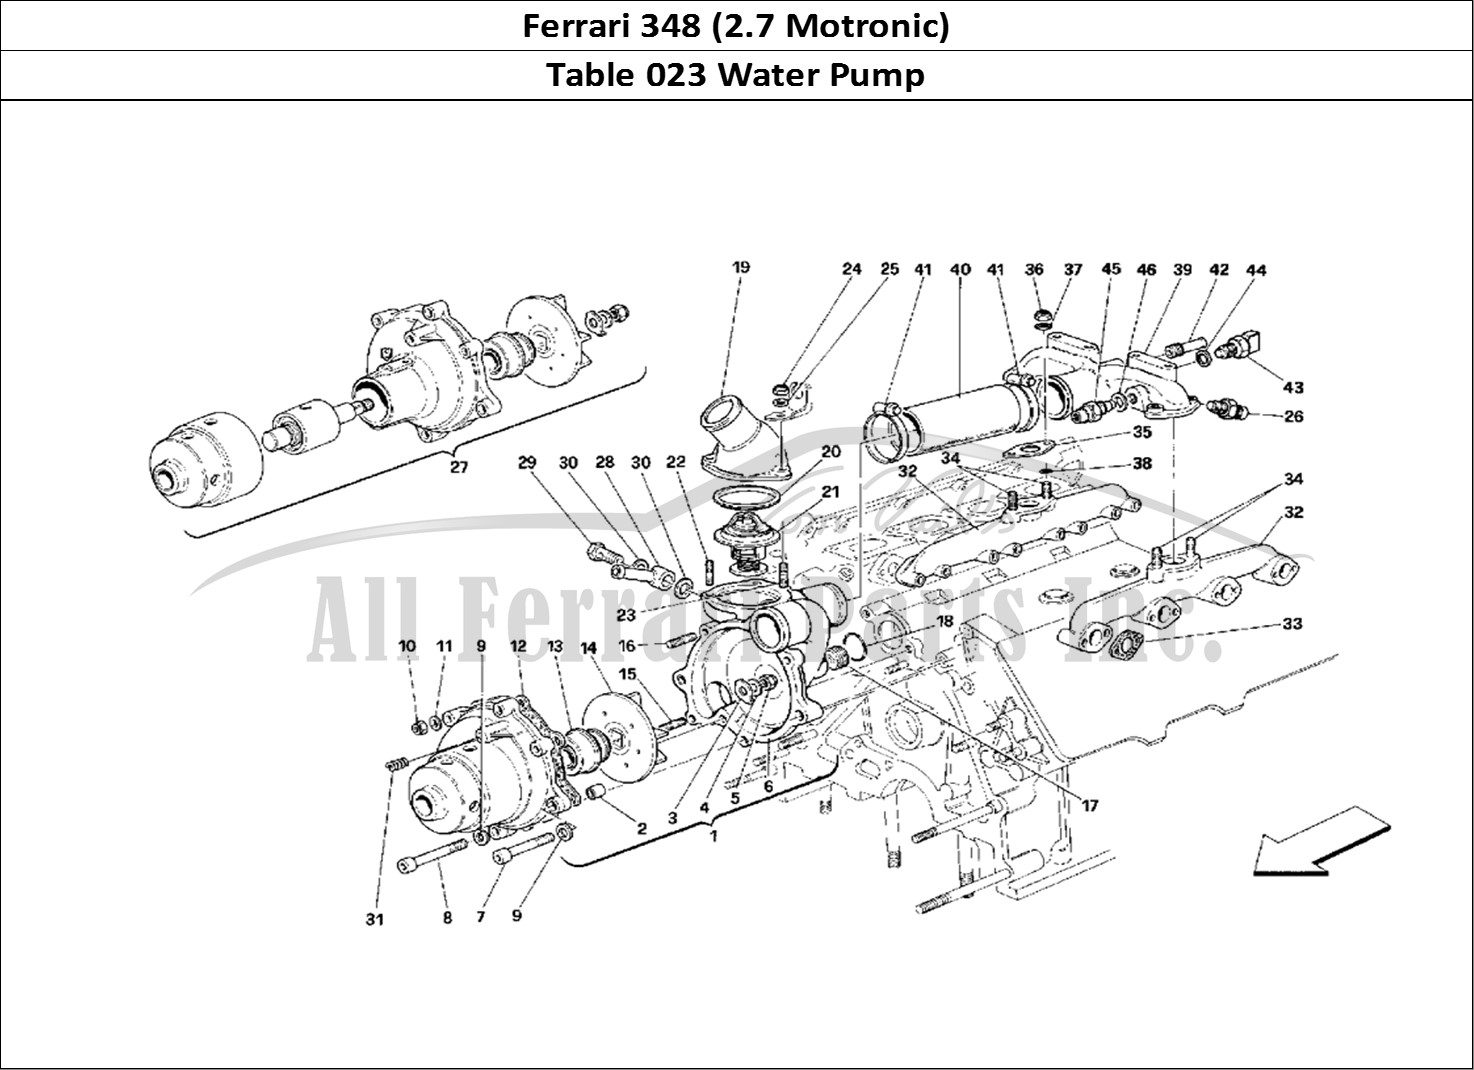 Ferrari Parts Ferrari 348 (2.7 Motronic) Page 023 Water Pump